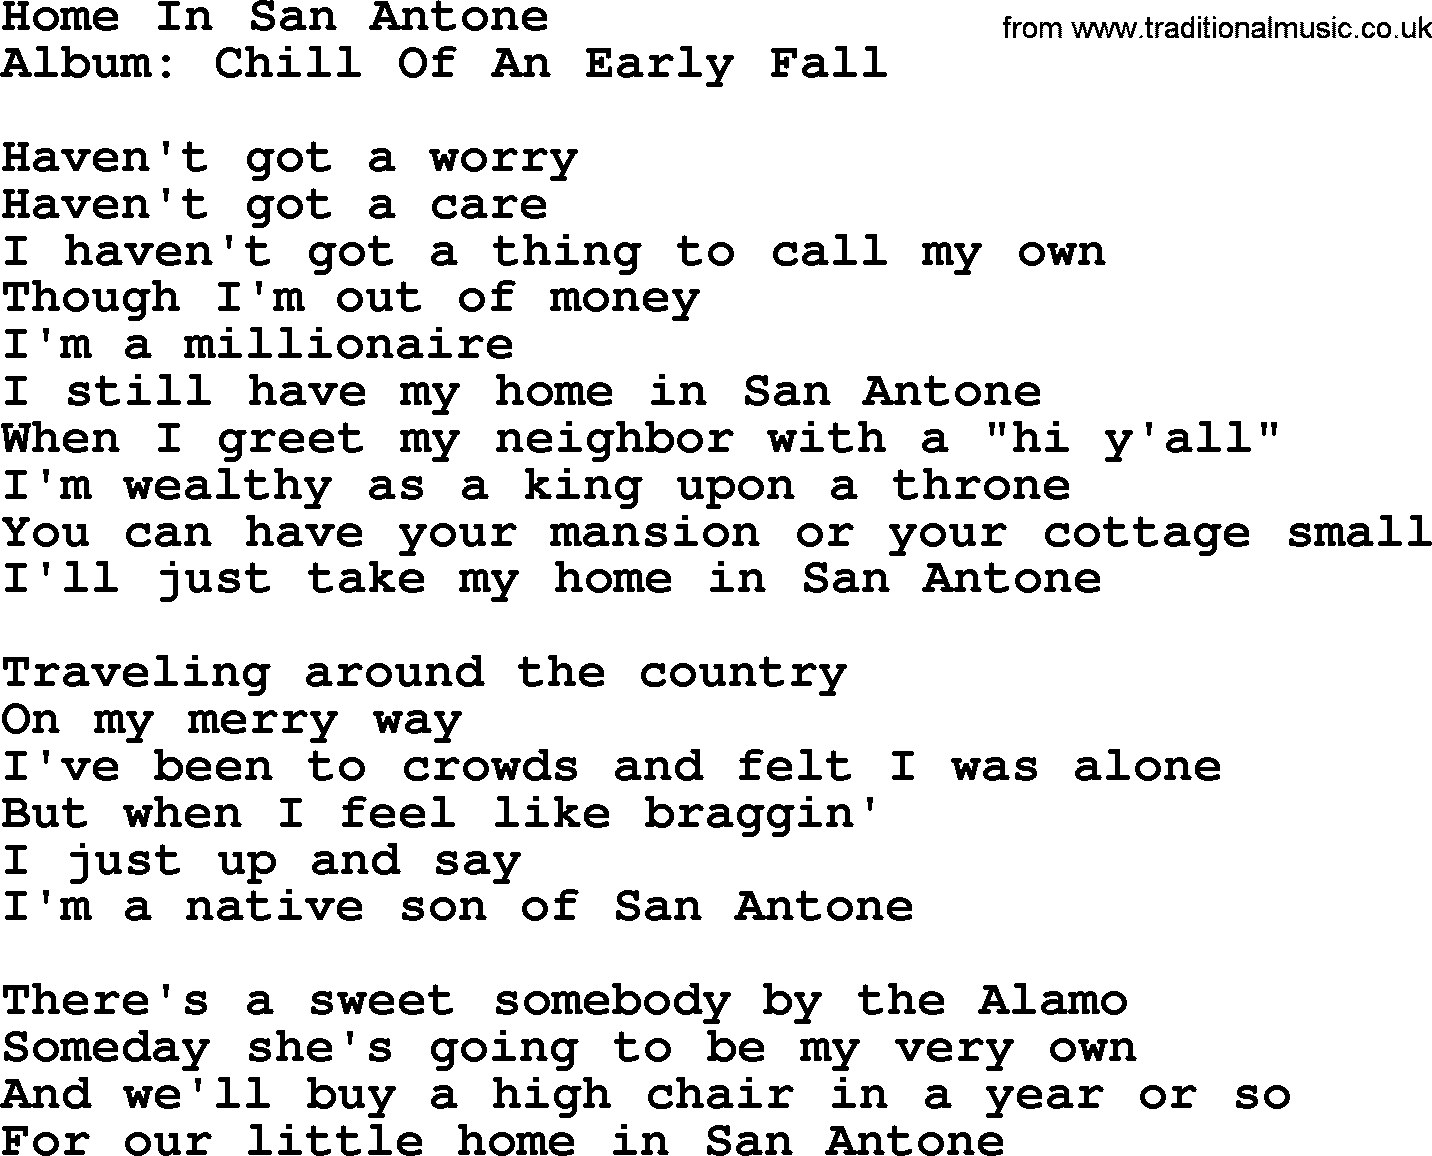 George Strait song: Home In San Antone, lyrics